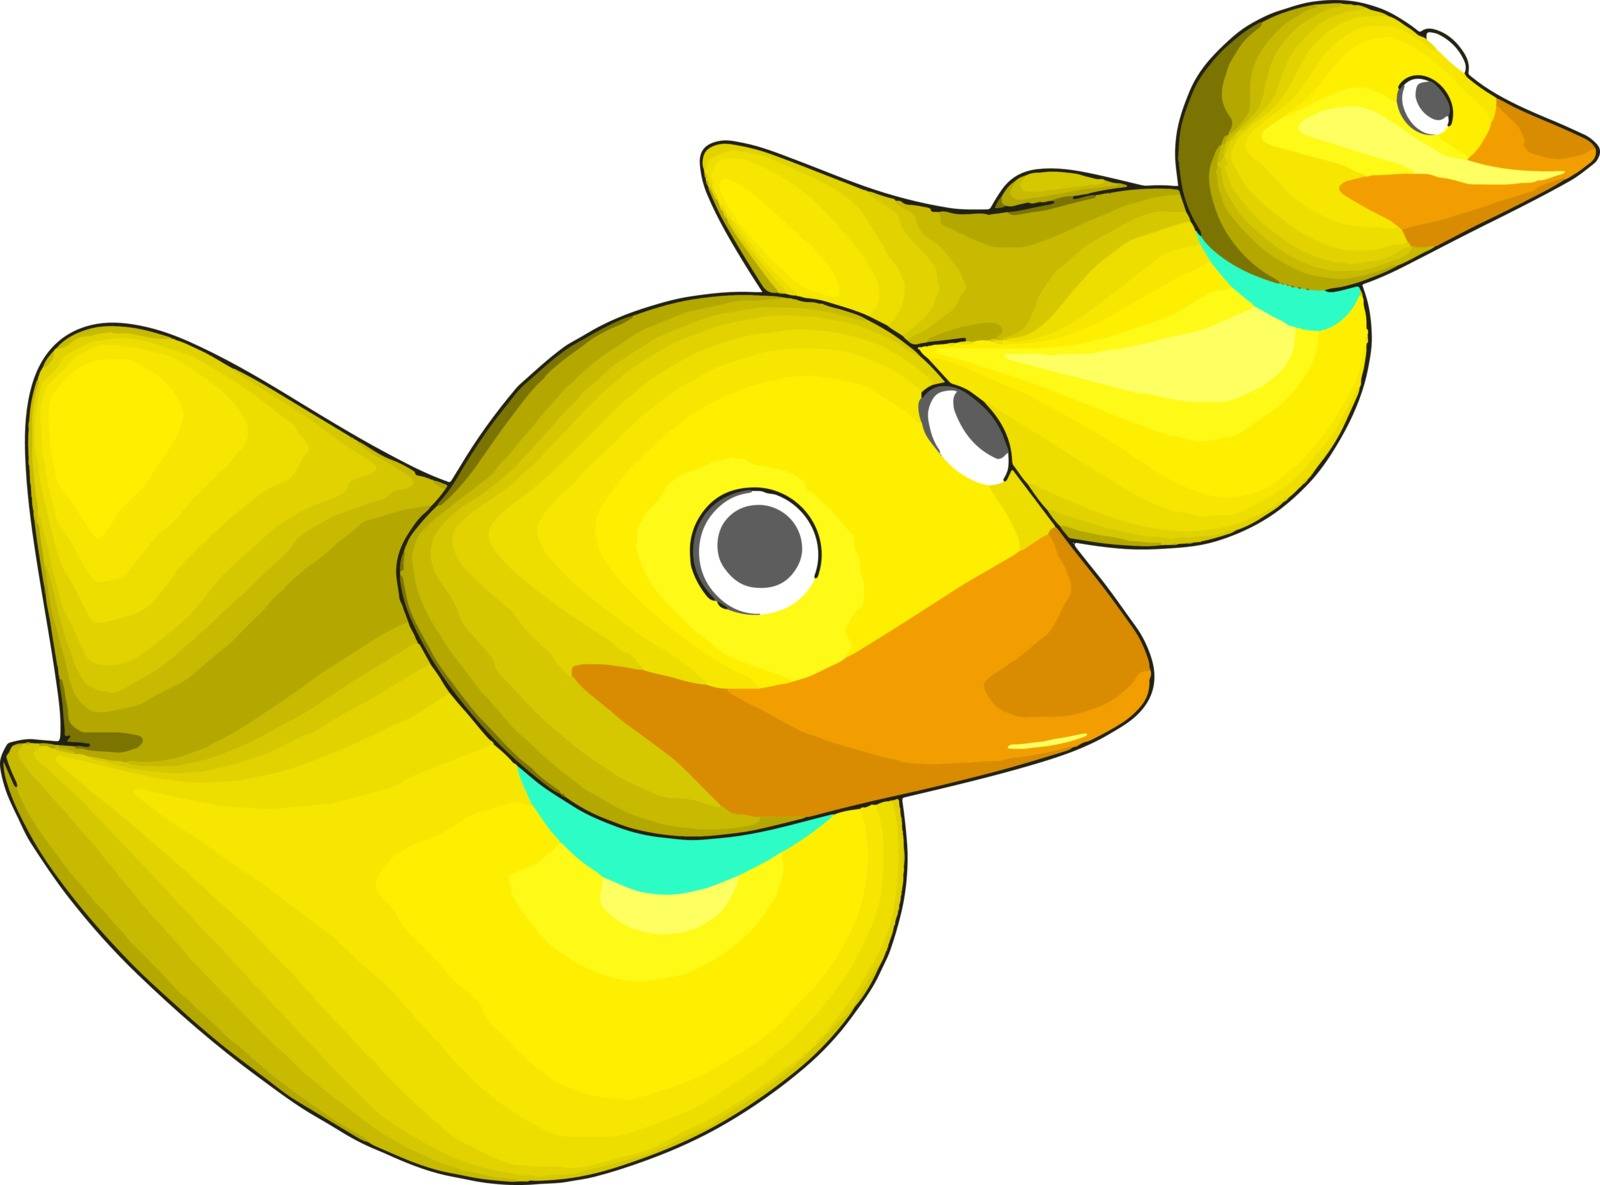 Rubber duck, illustration, vector on white background. by Morphart